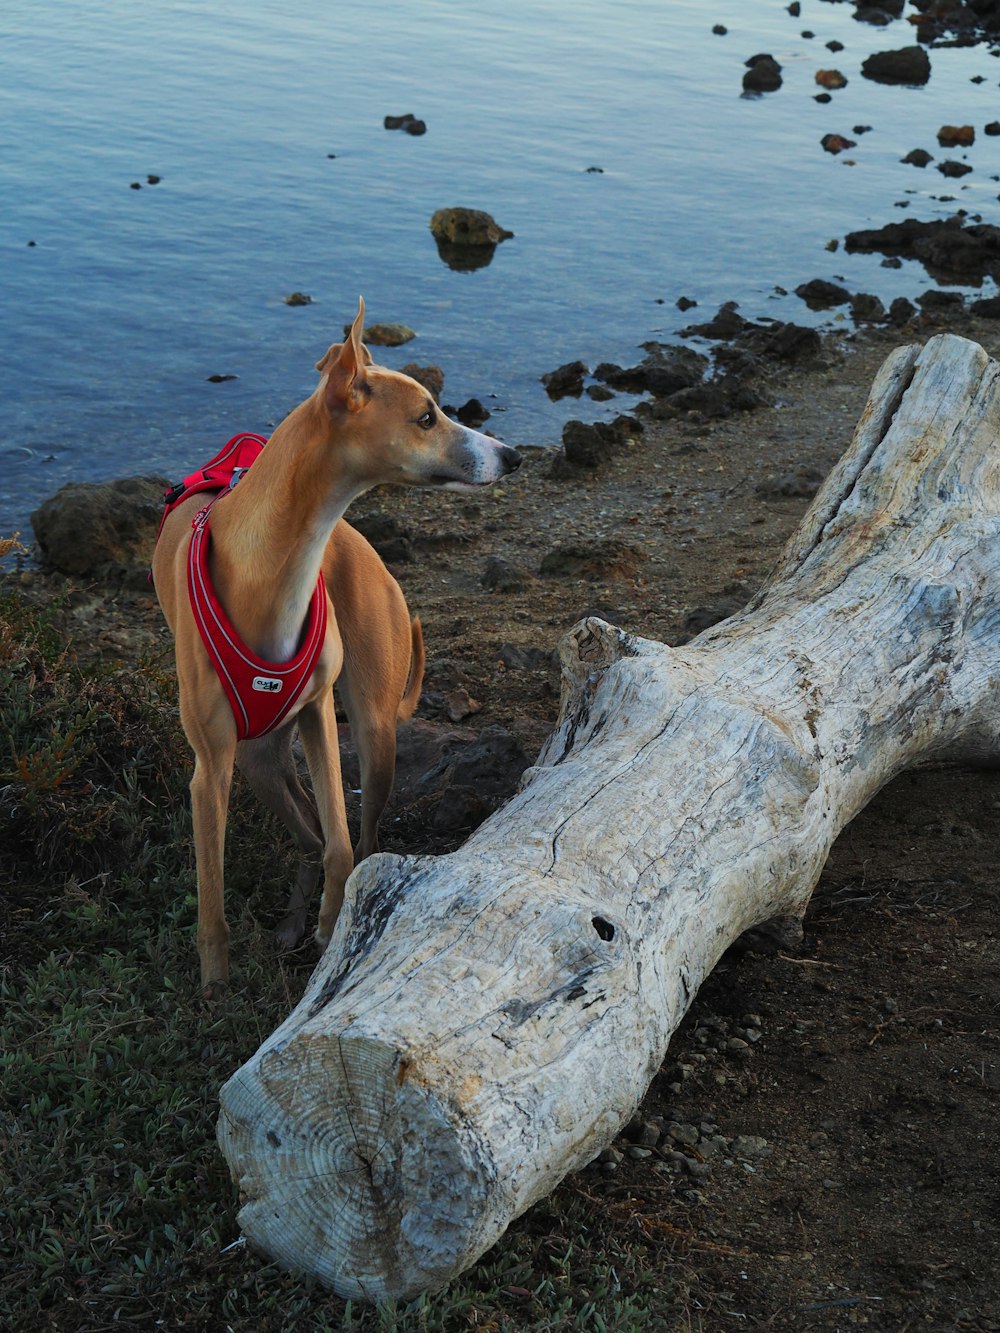 a dog standing next to a log on a beach